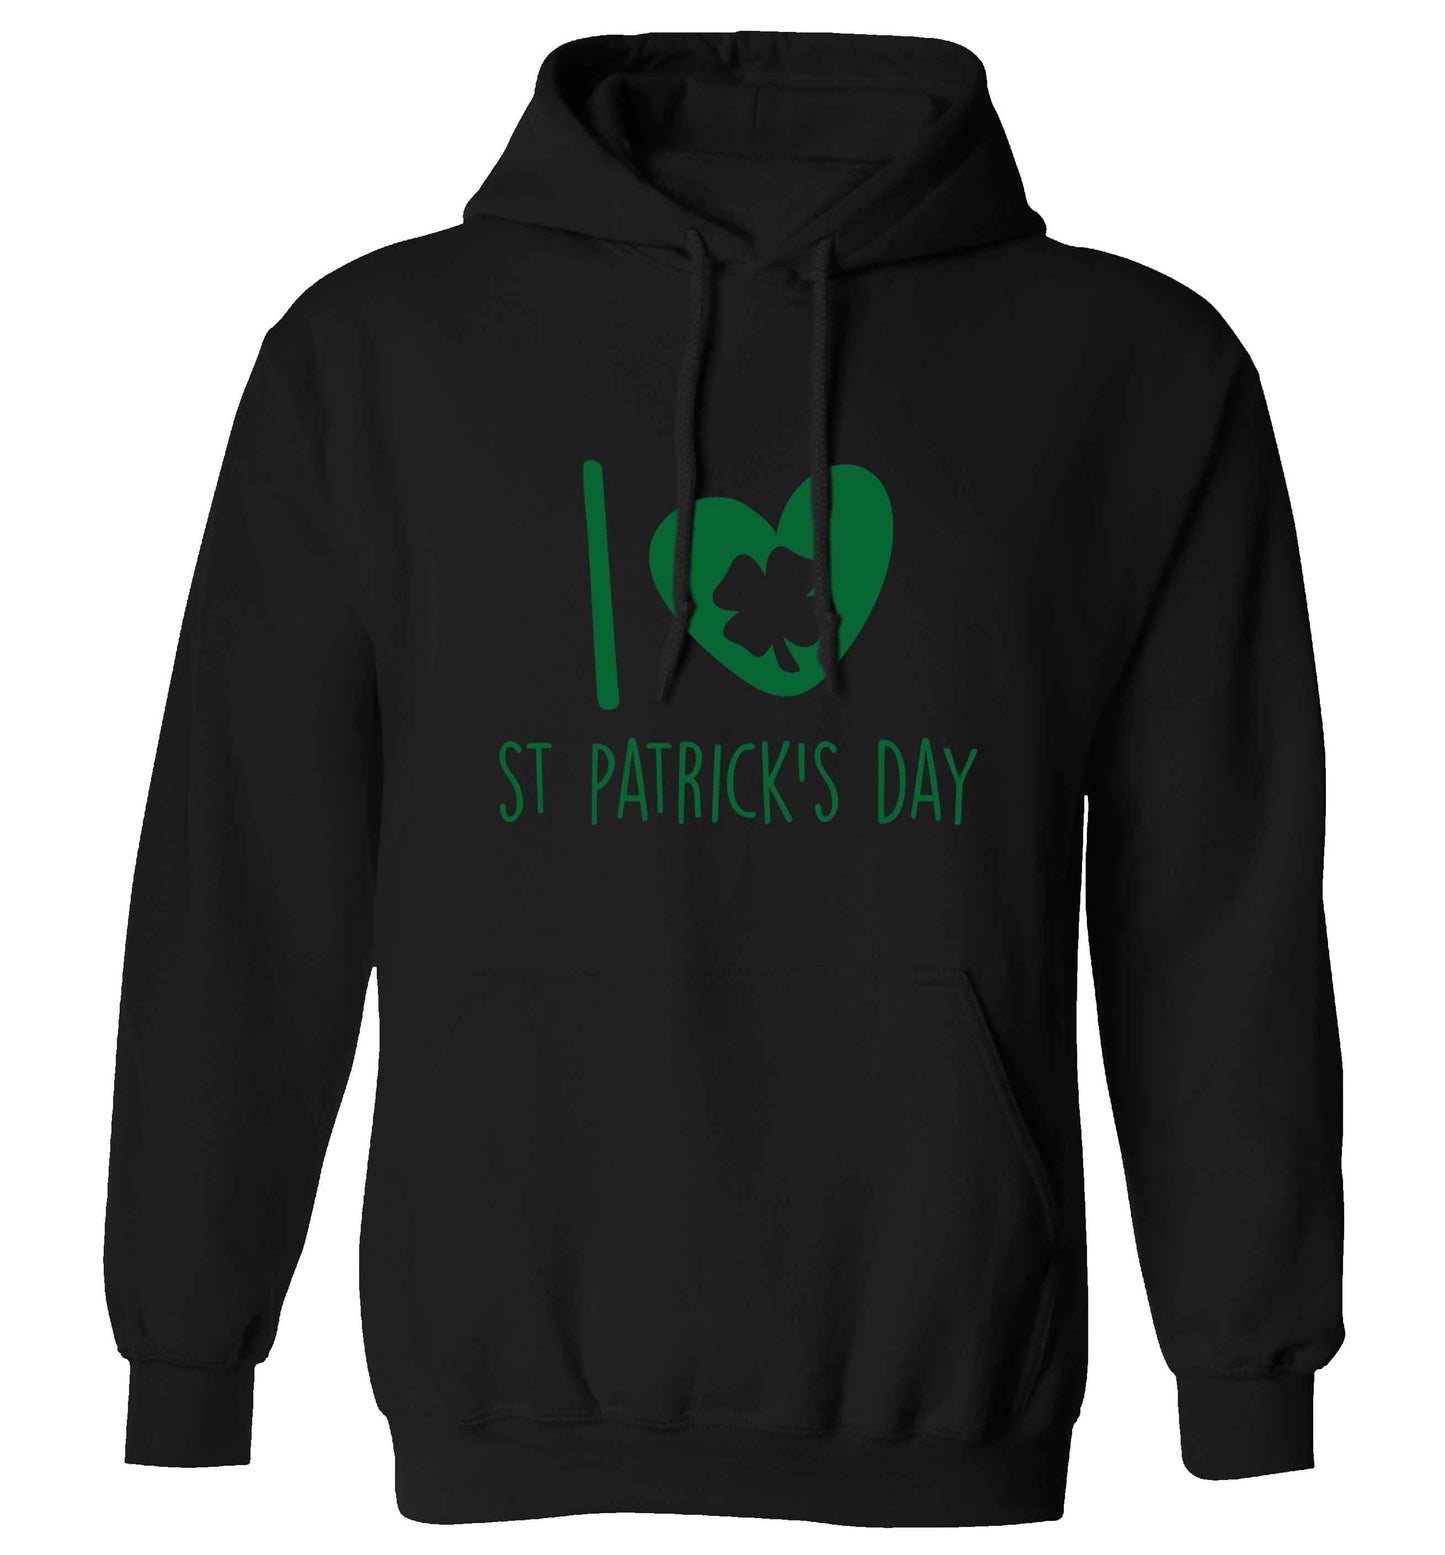 I love St.Patricks day adults unisex black hoodie 2XL